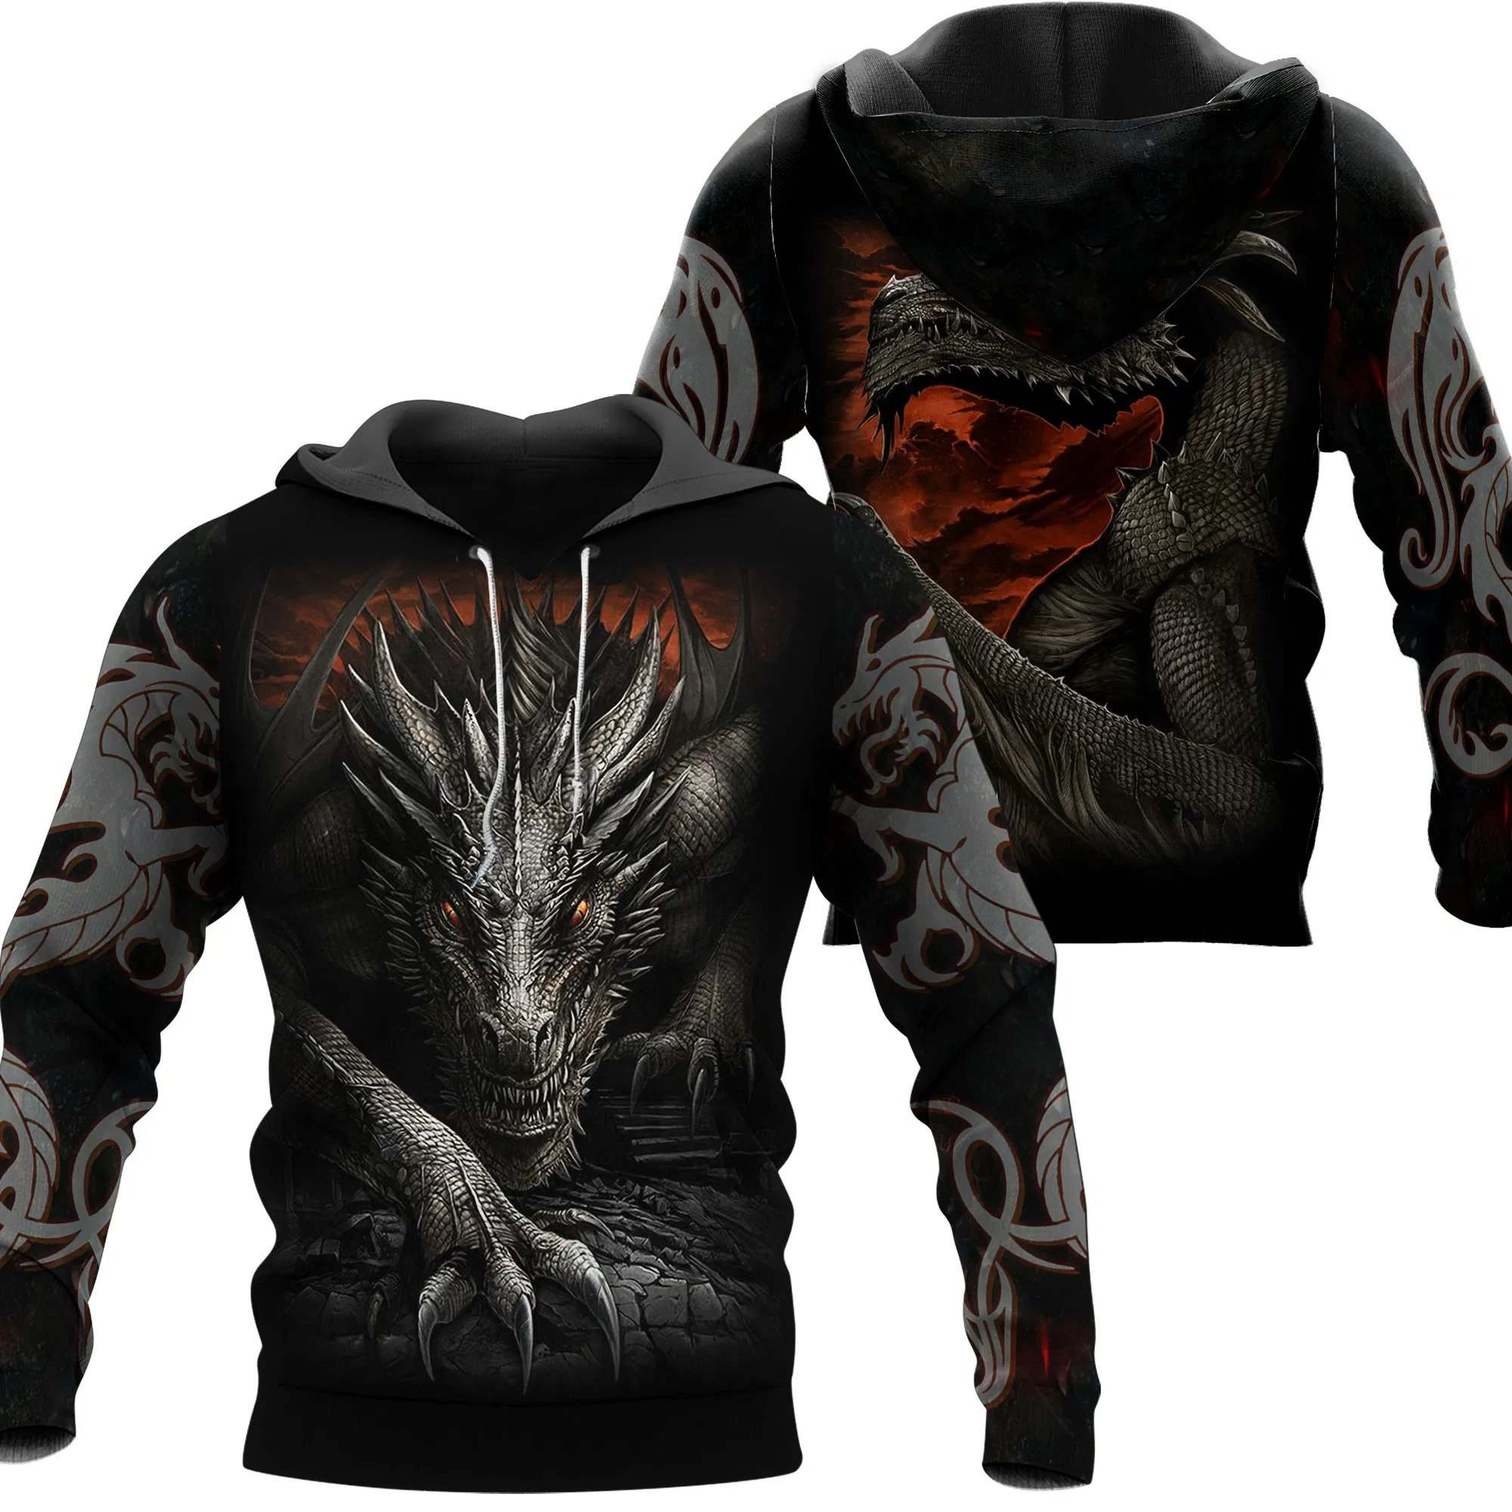 Dragon armor all over printed hoodie